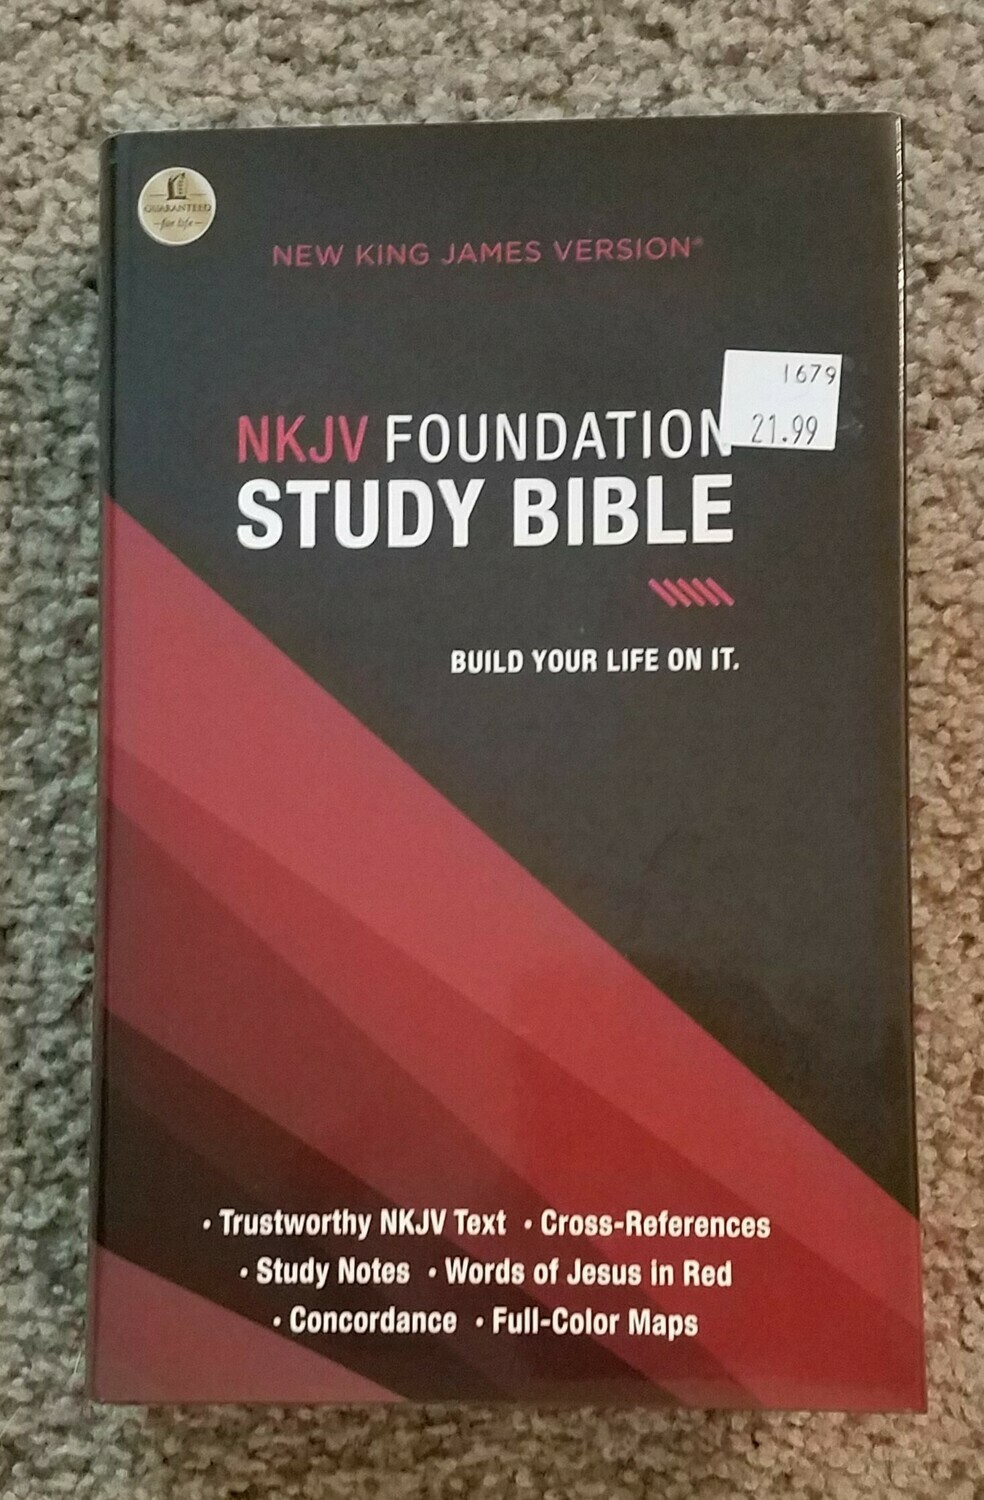 Foundation Study Bible - New King James Version